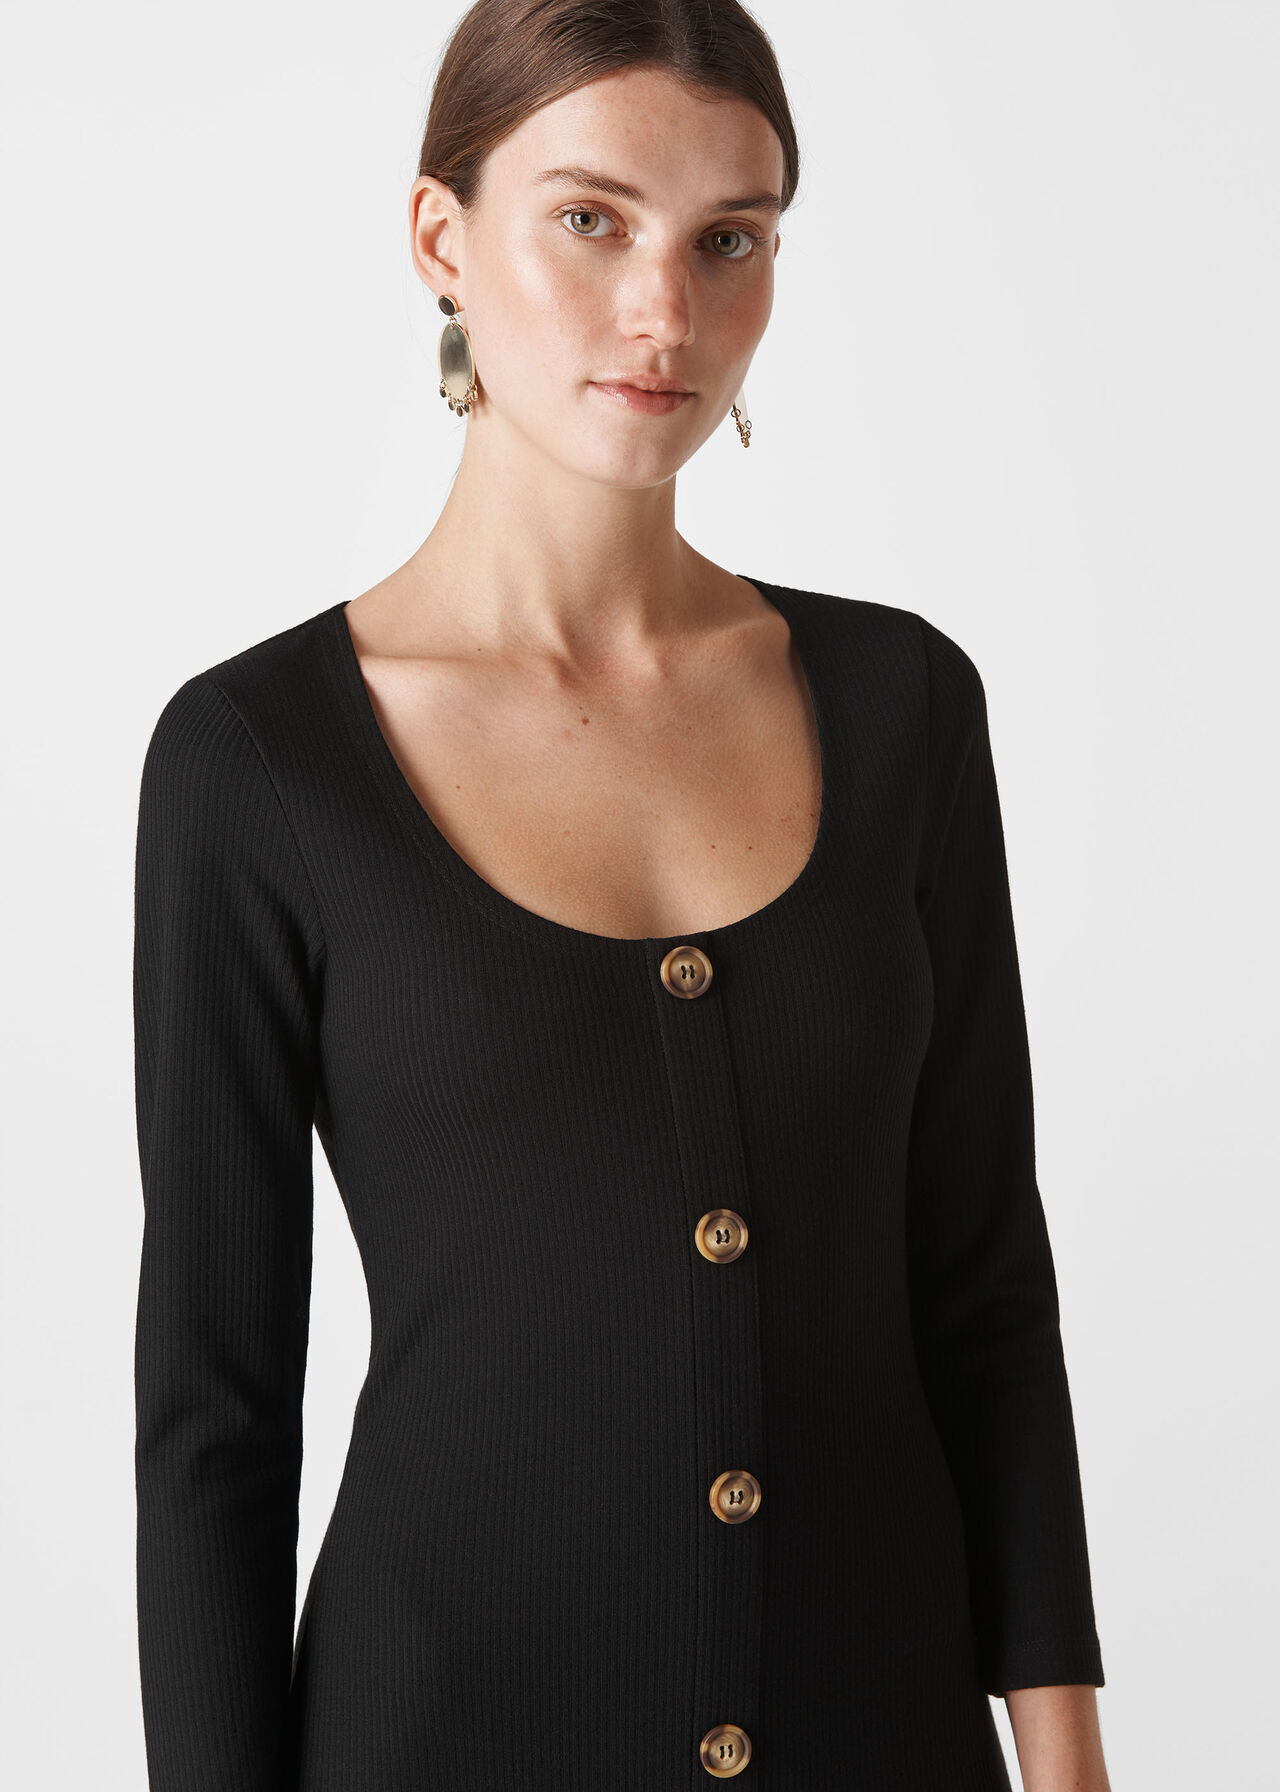 Button Detail Jersey Dress Black